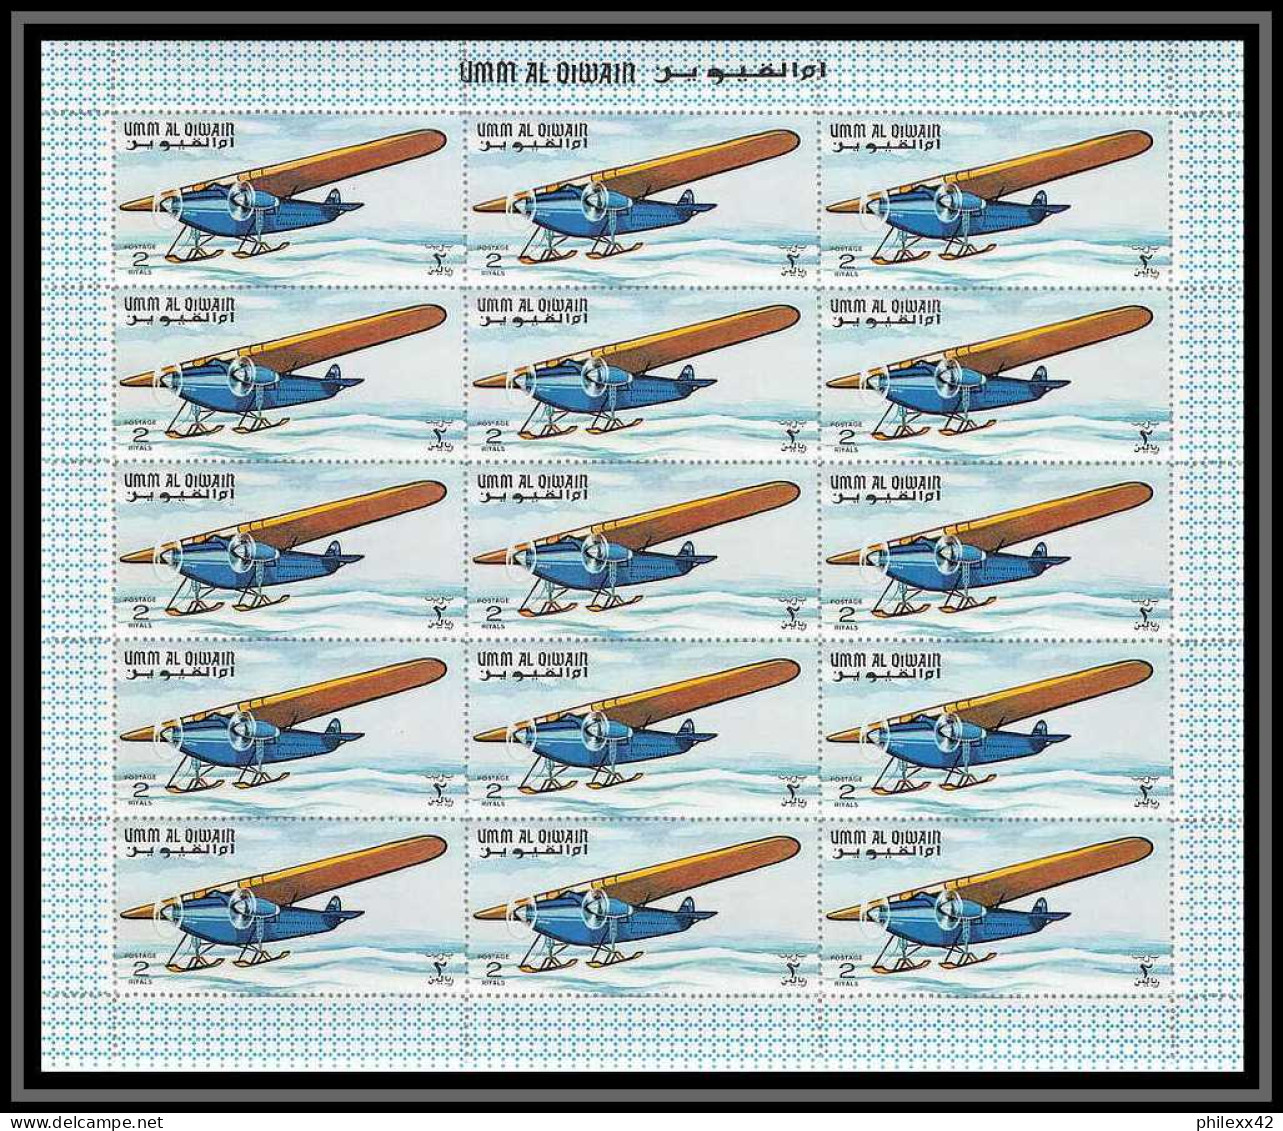 091b - Umm al Qiwain - MNH ** N° 296 / 304 A the history of aviation avion (plane) feuilles (sheets) blériot dc4 boeing